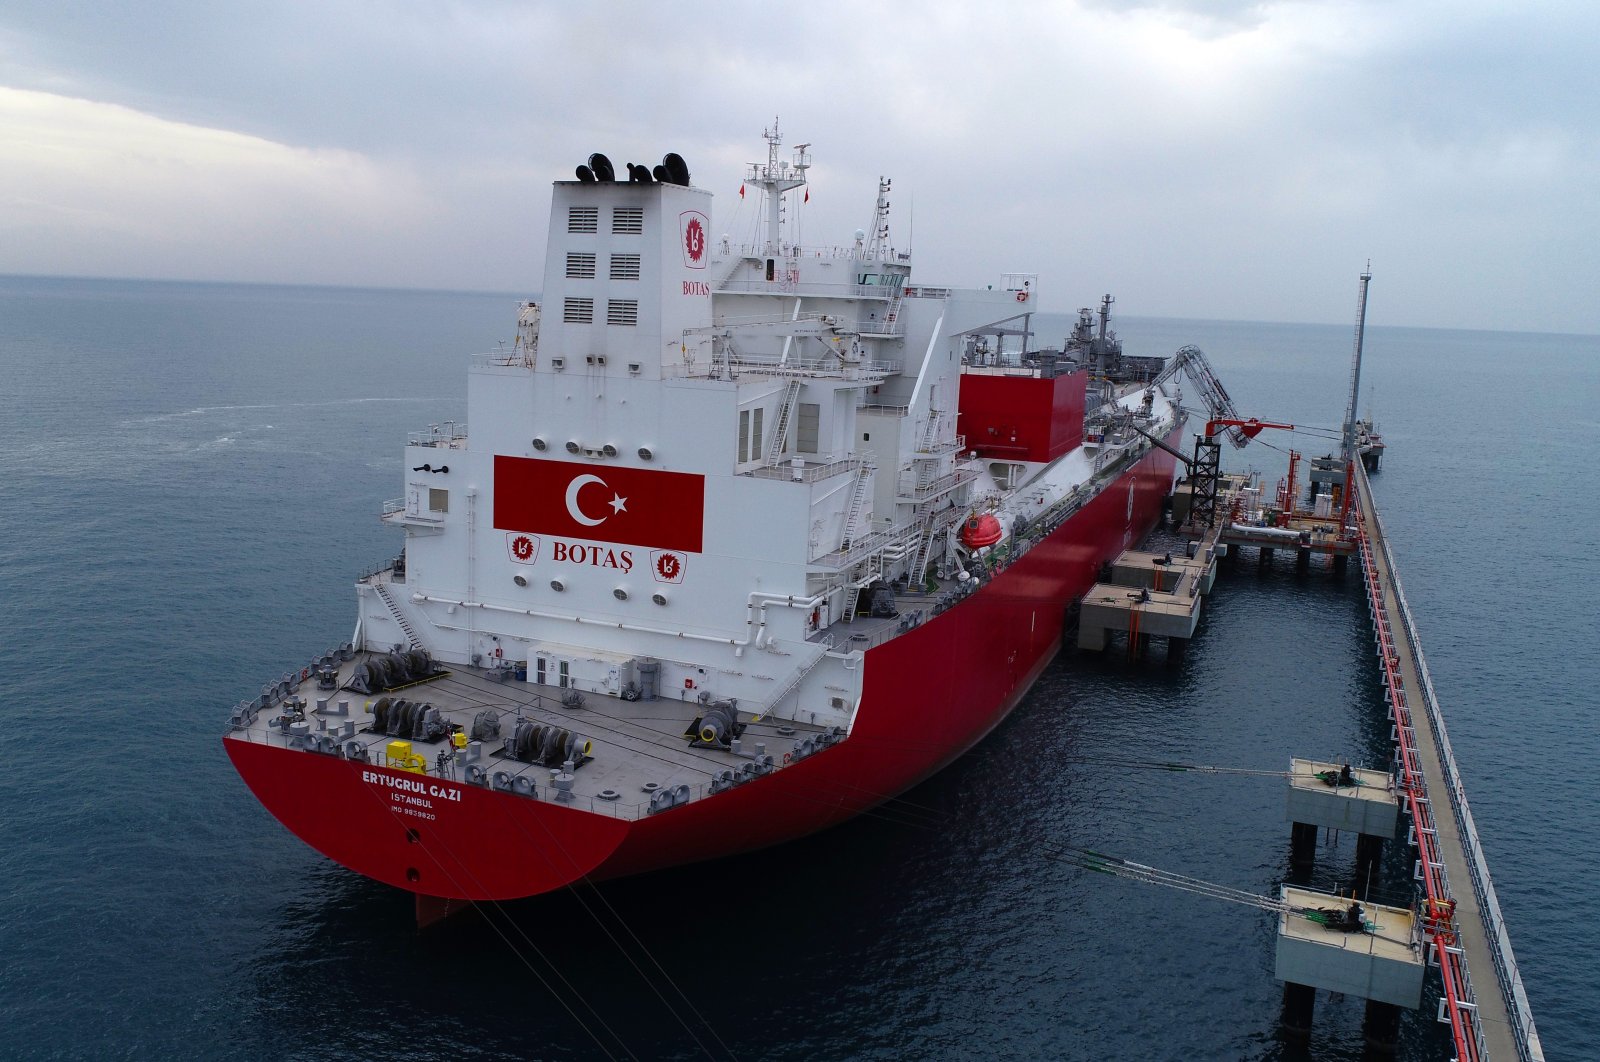 Turkey’s first floating storage and regasification unit (FSRU) Ertuğrul Gazi is seen at the port in Dörtyol in Turkey’s southern province of Hatay, Turkey, Feb. 3, 2022. (IHA Photo)